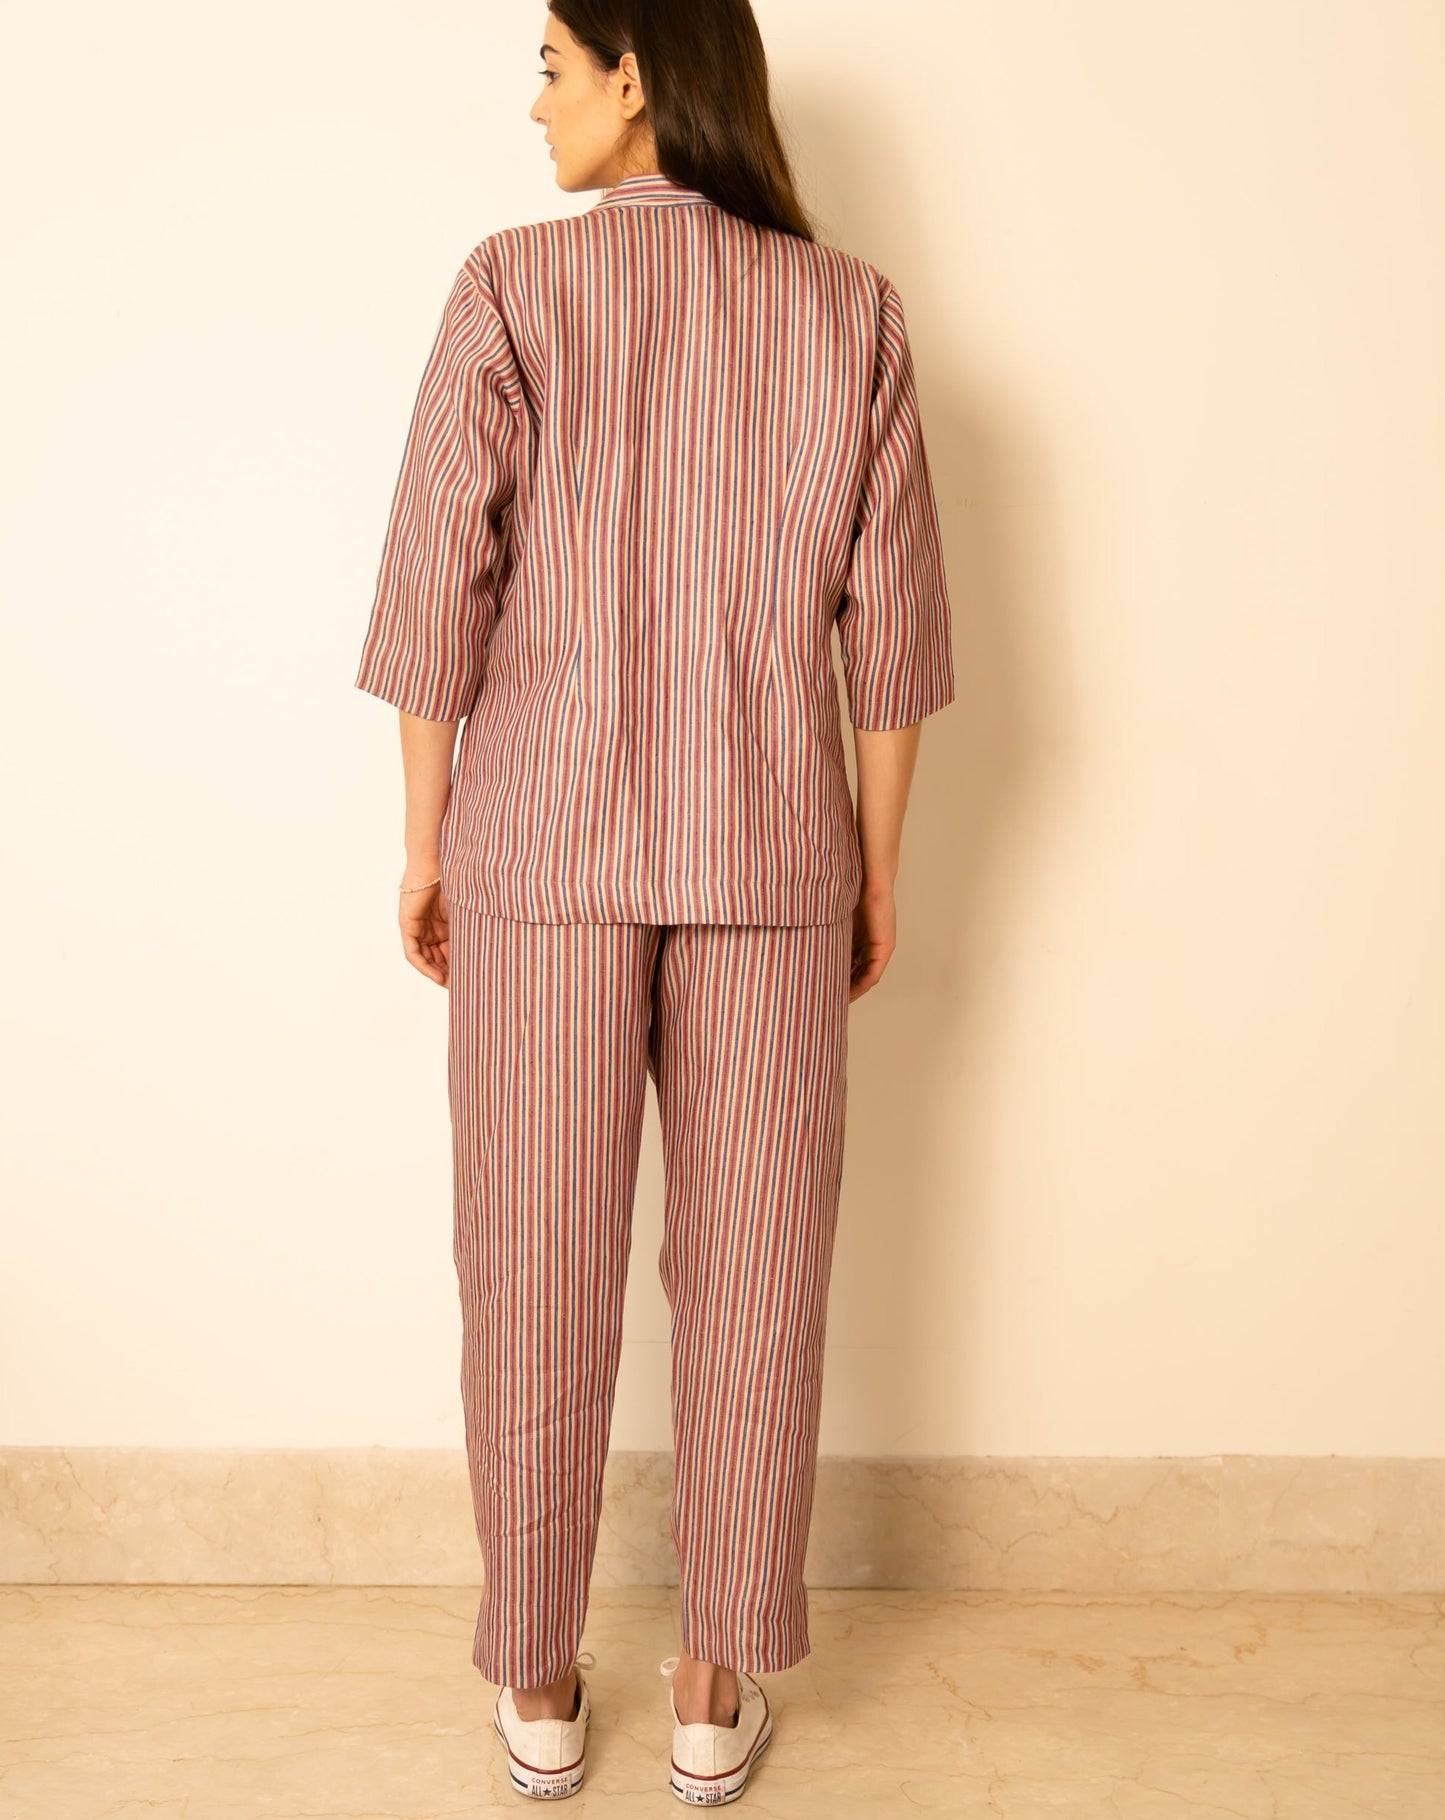 JULIET Linen Pant Suit for Women - OrganoLinen